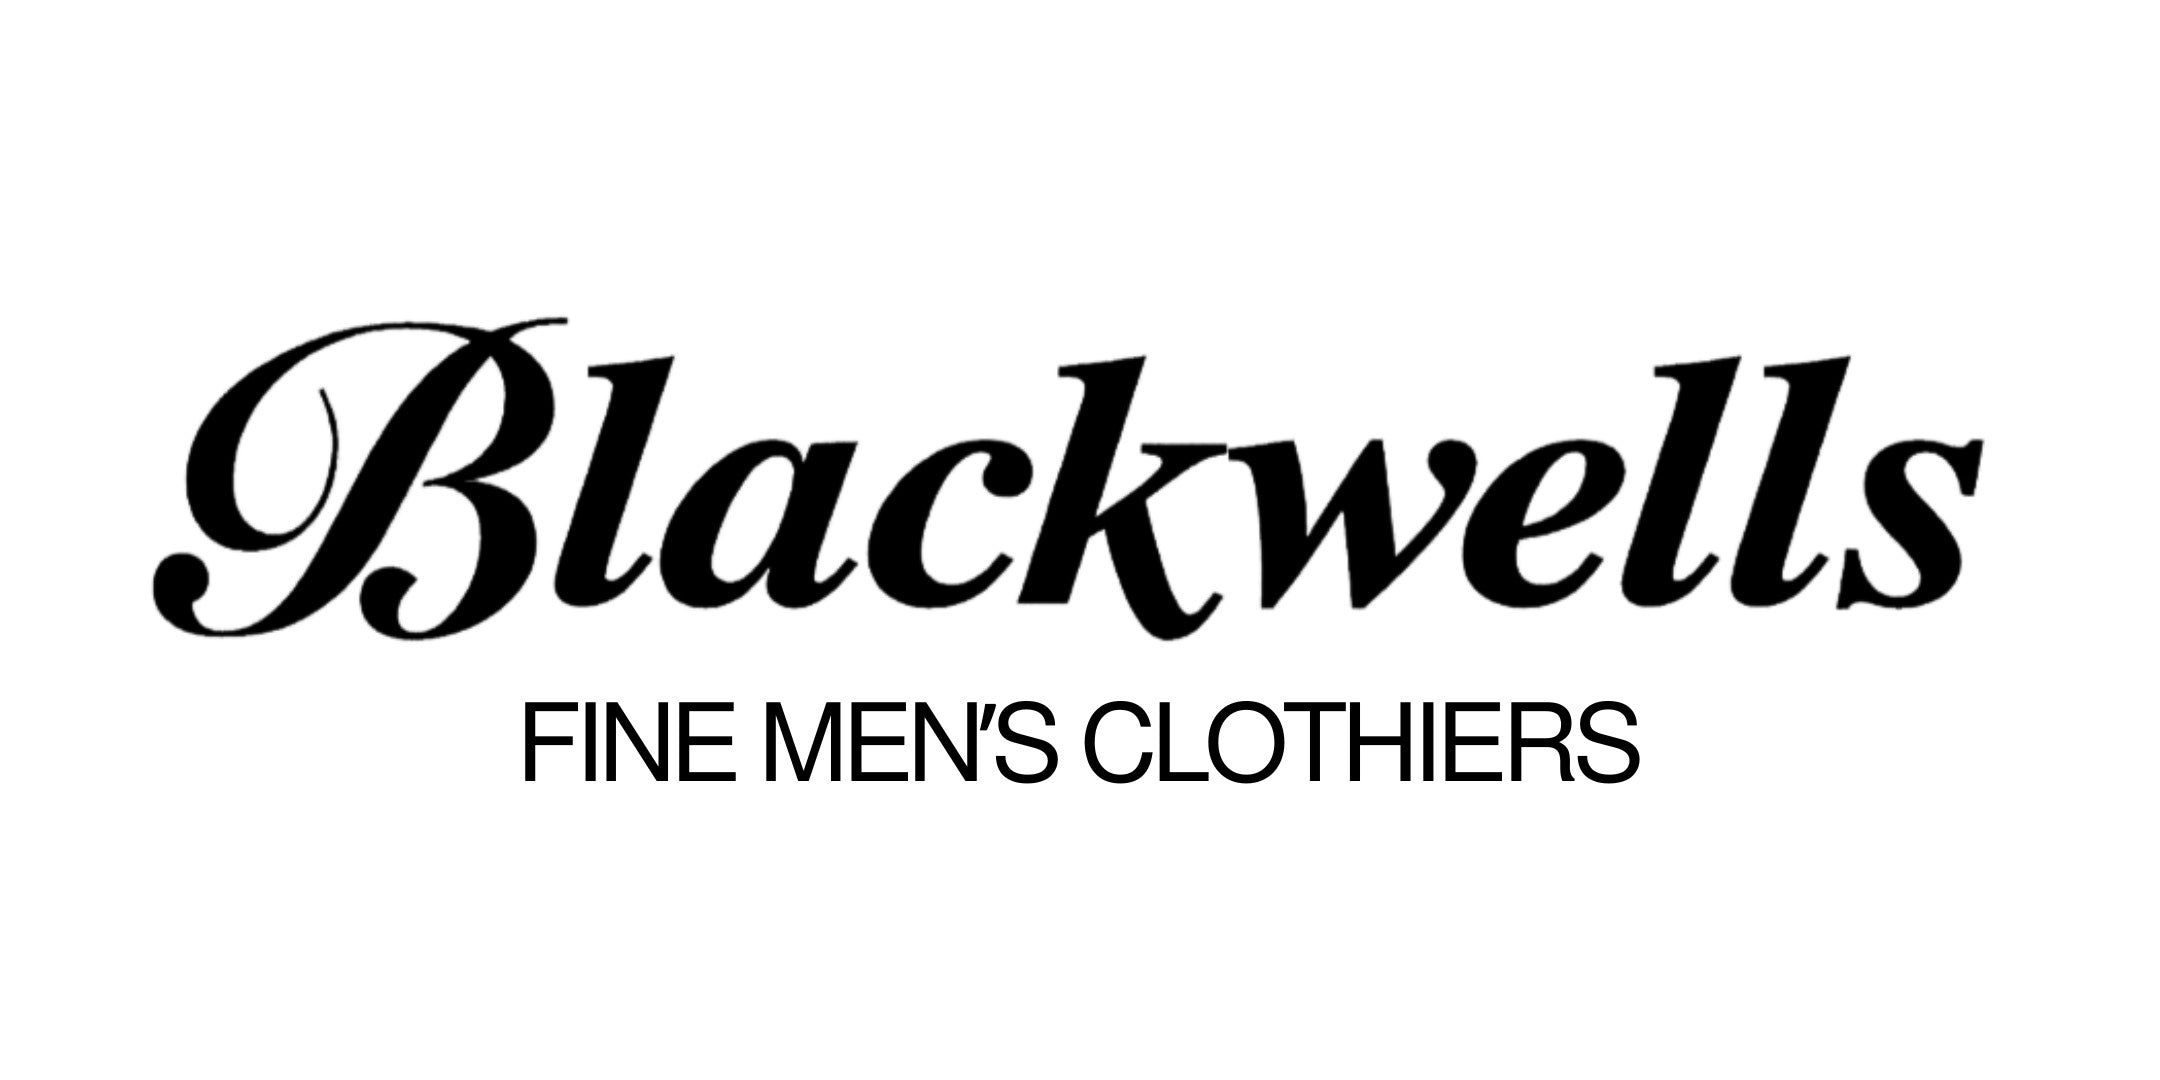 Blackwells Men's Clothing